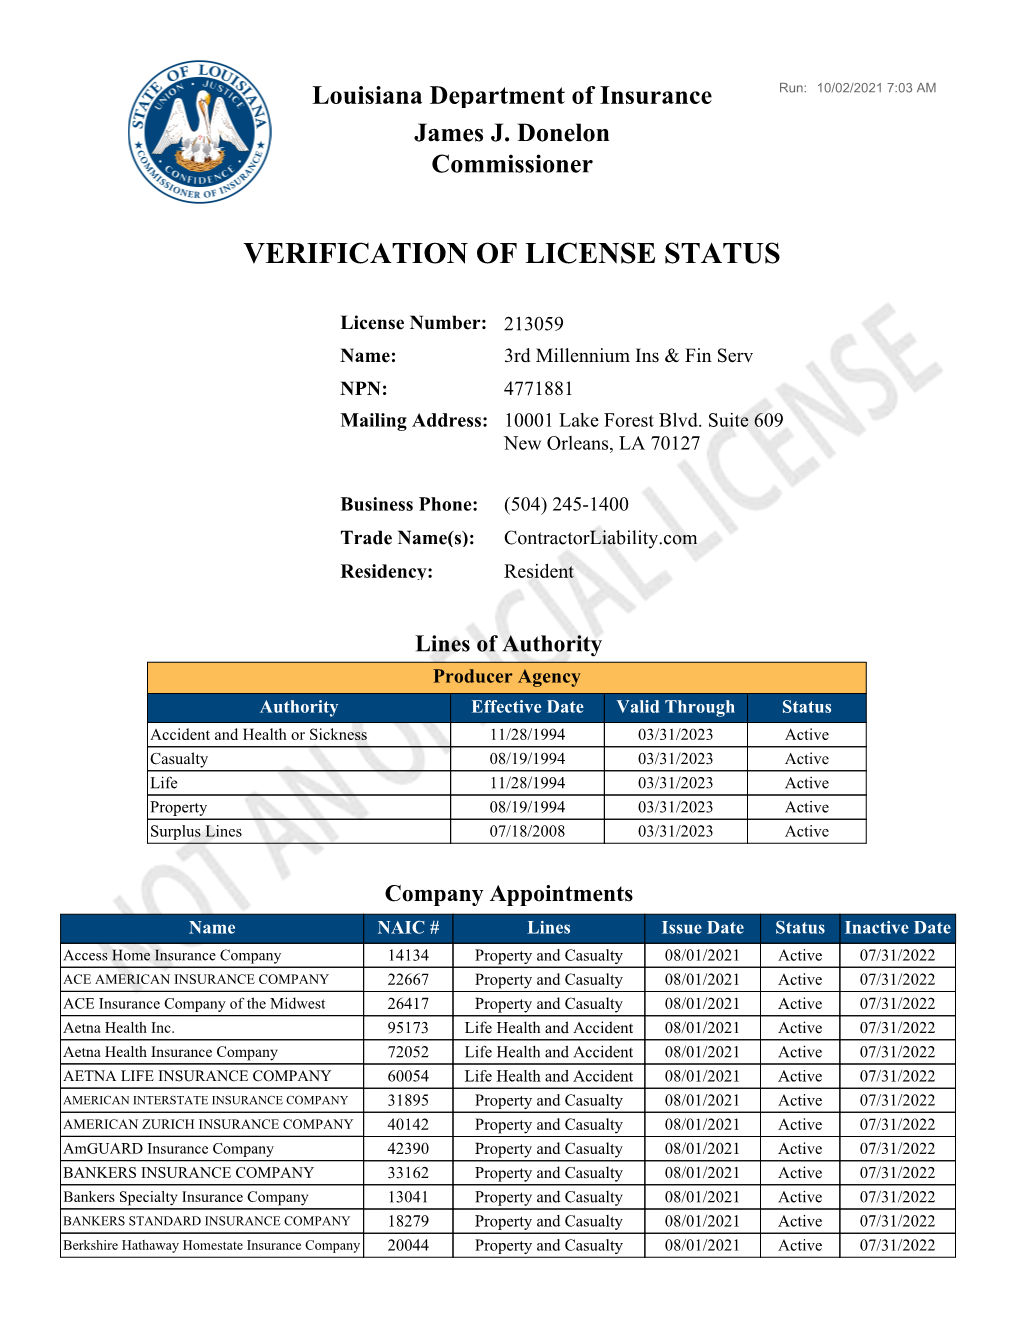 Verification of License Status